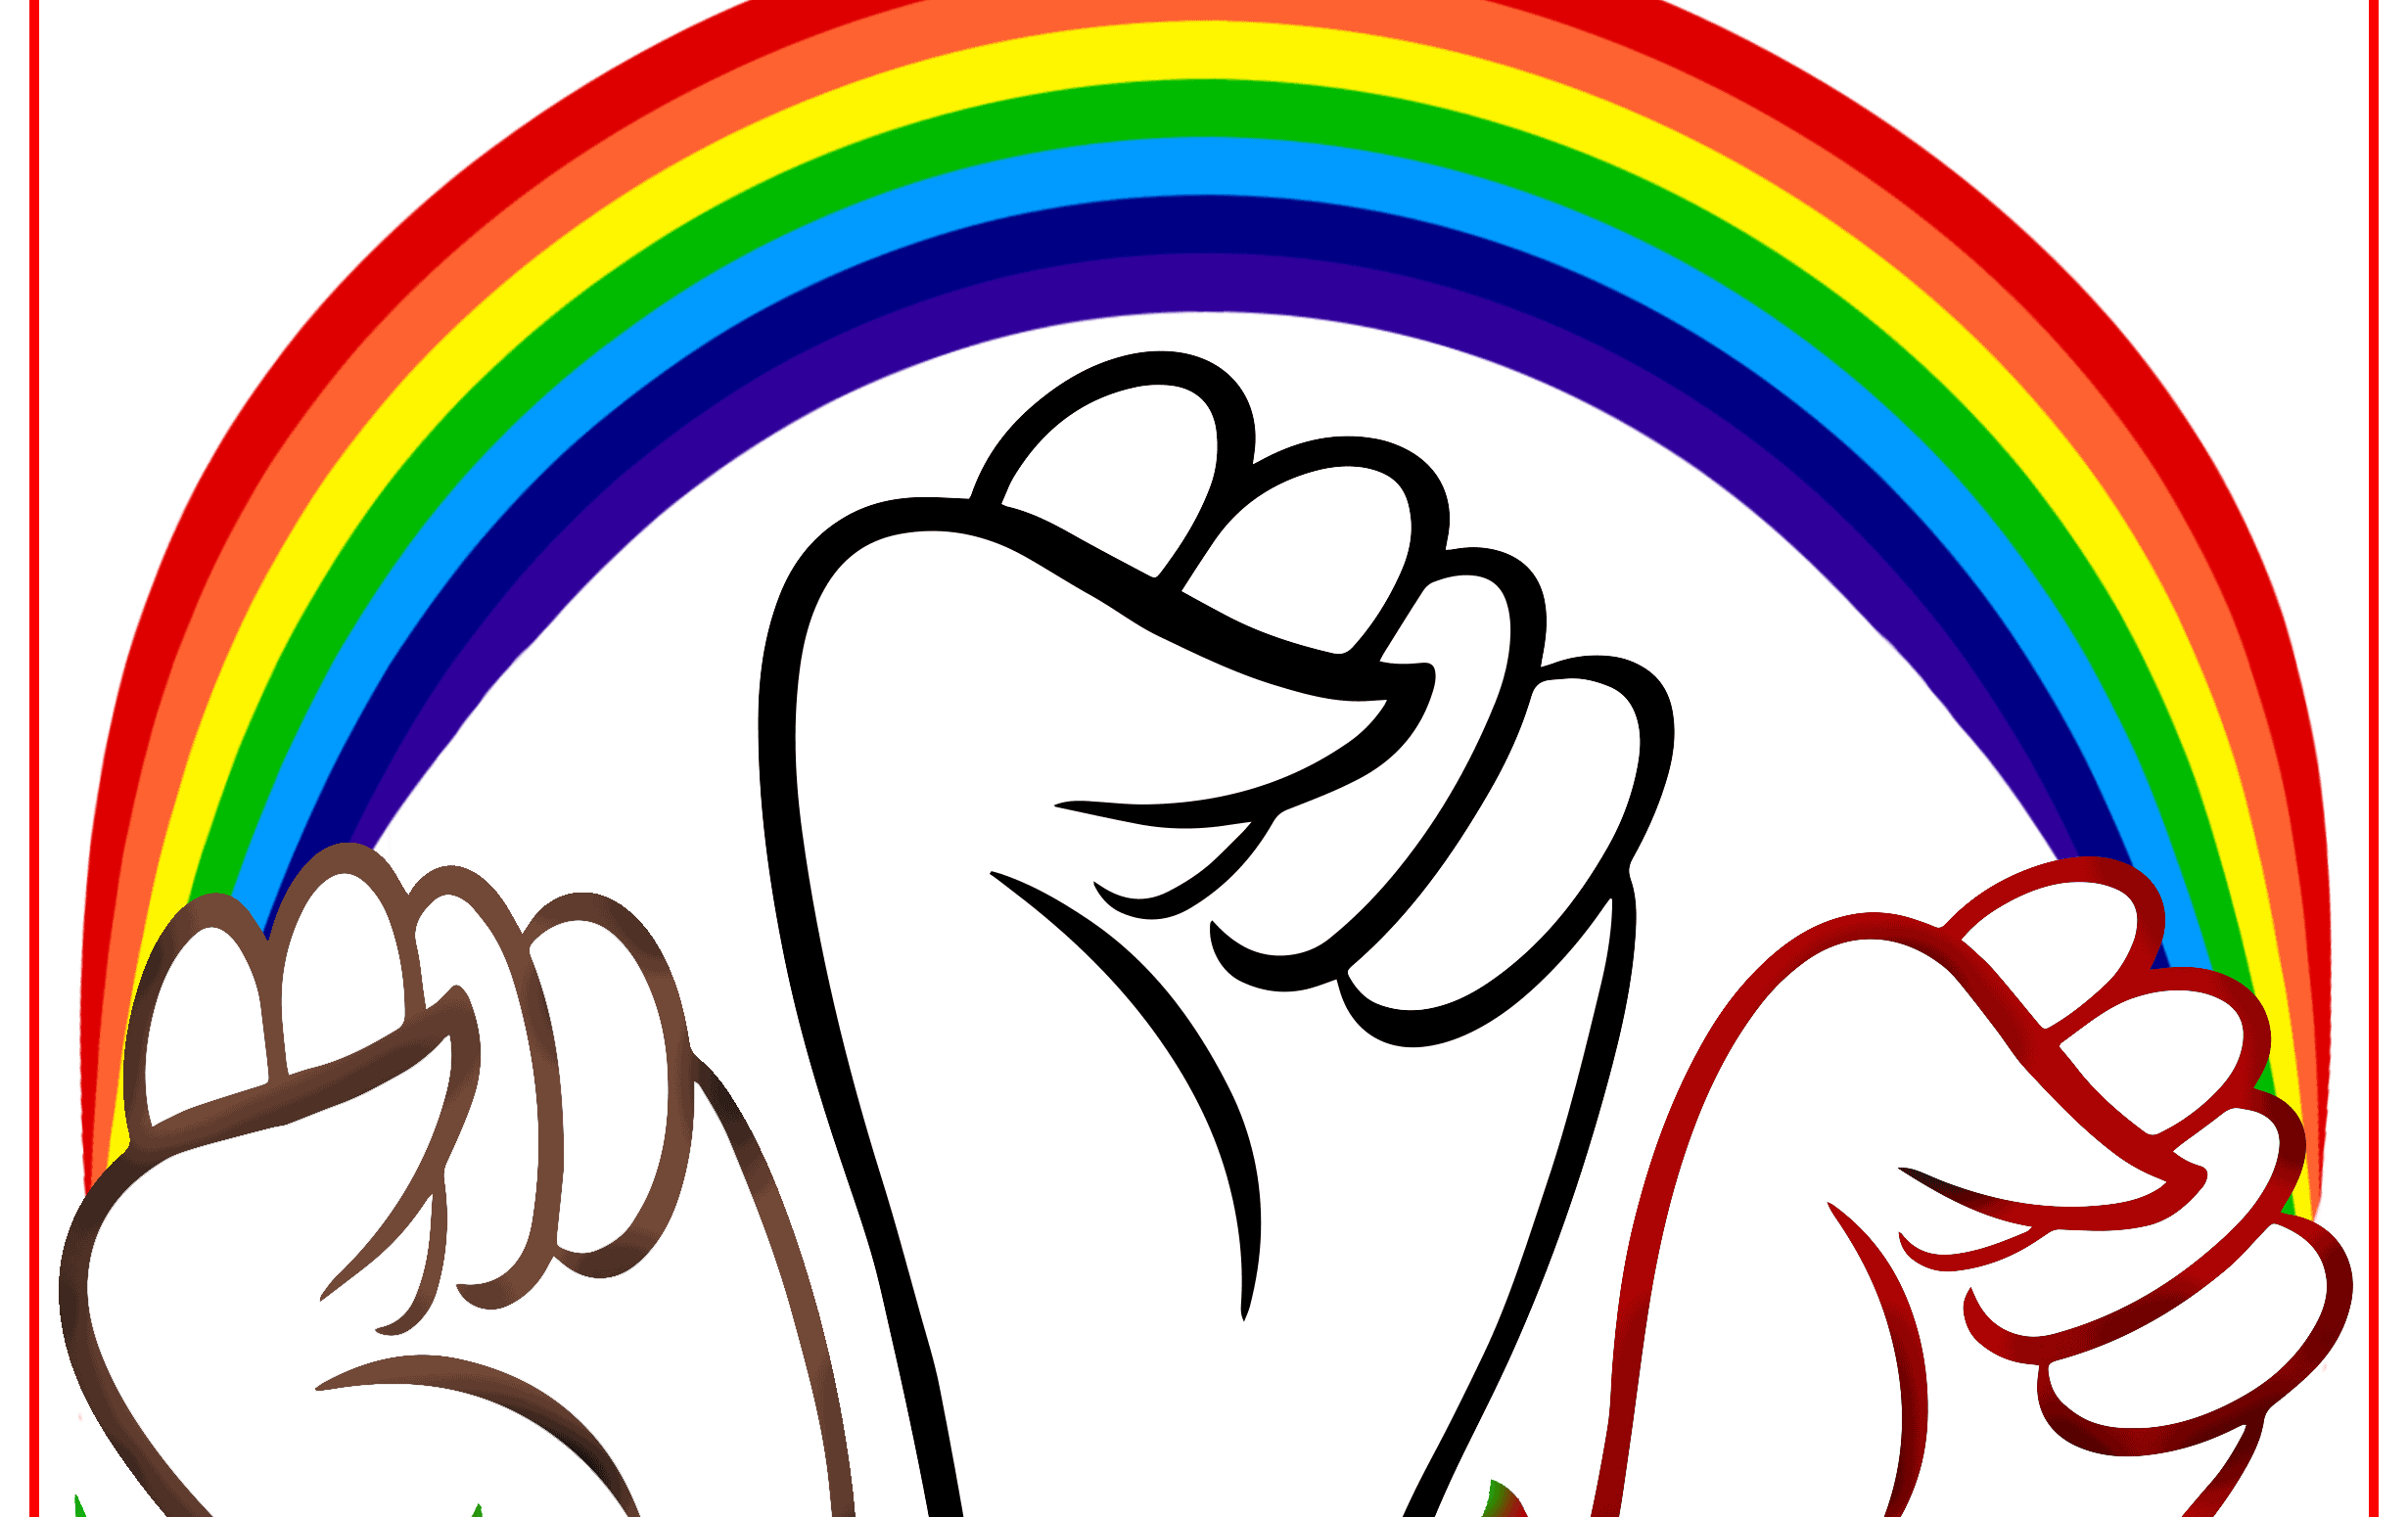 LGBTQI Rights Are Human Rights